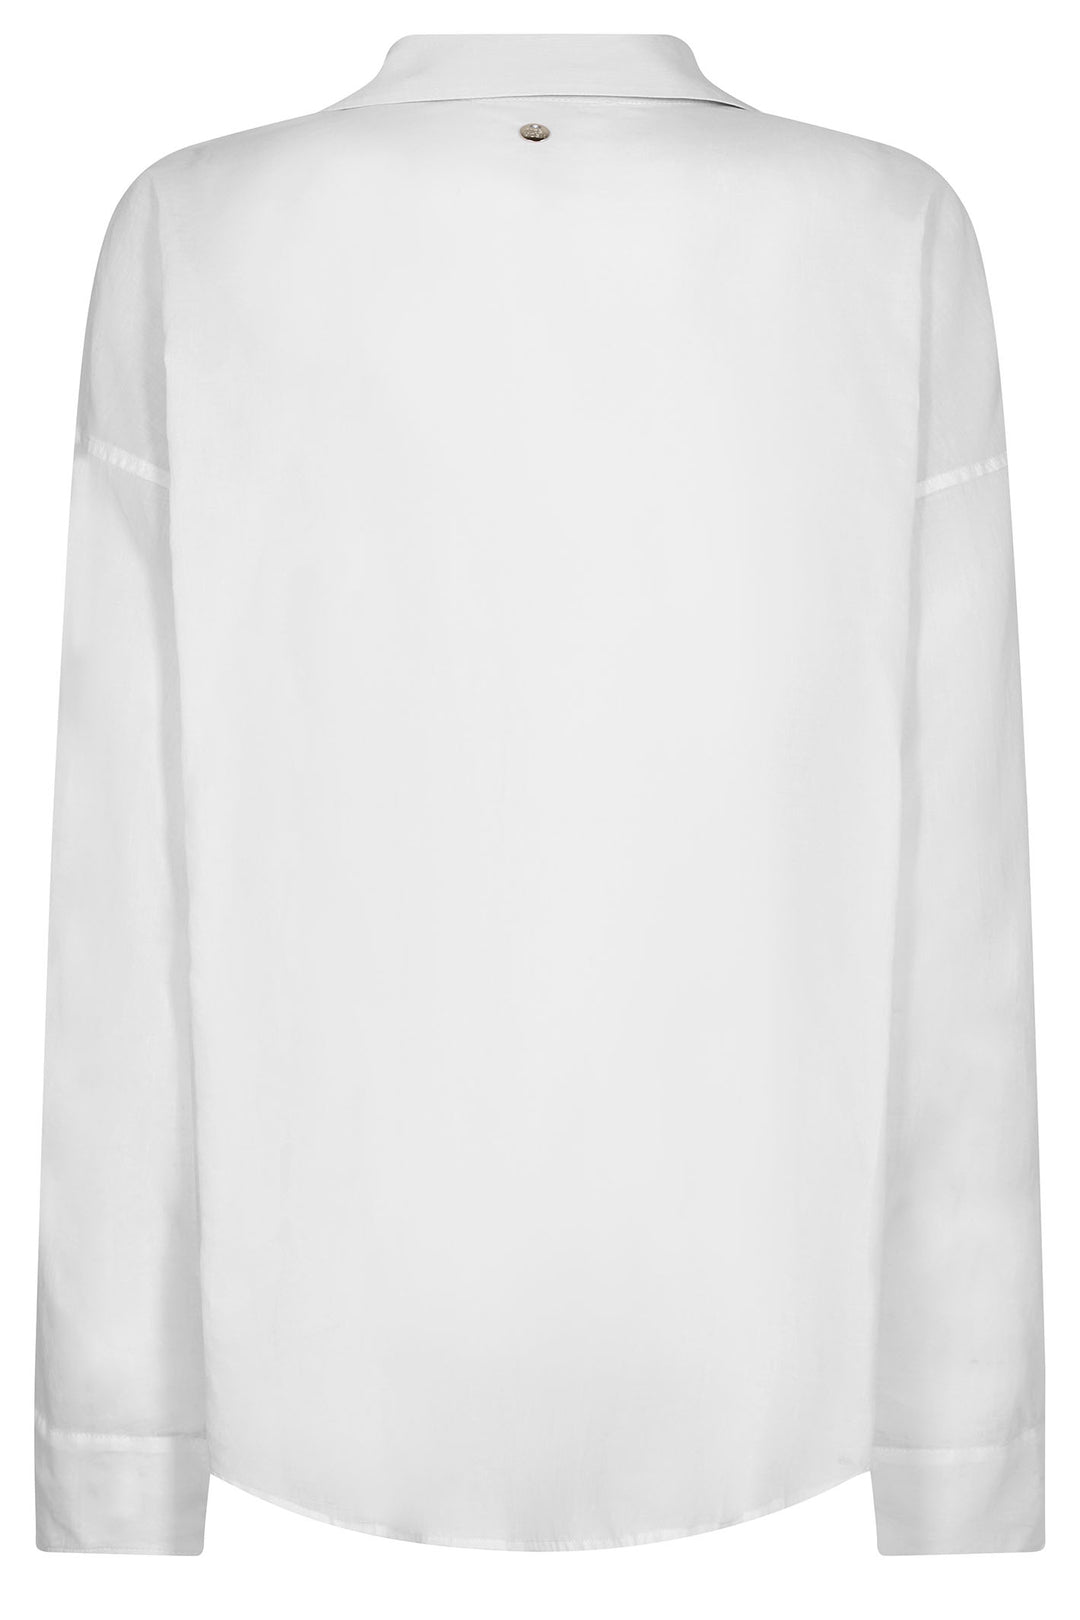 Mos Mosh 153740 MMJelena White Ruffle Front Voile Shirt - Dotique Boutique